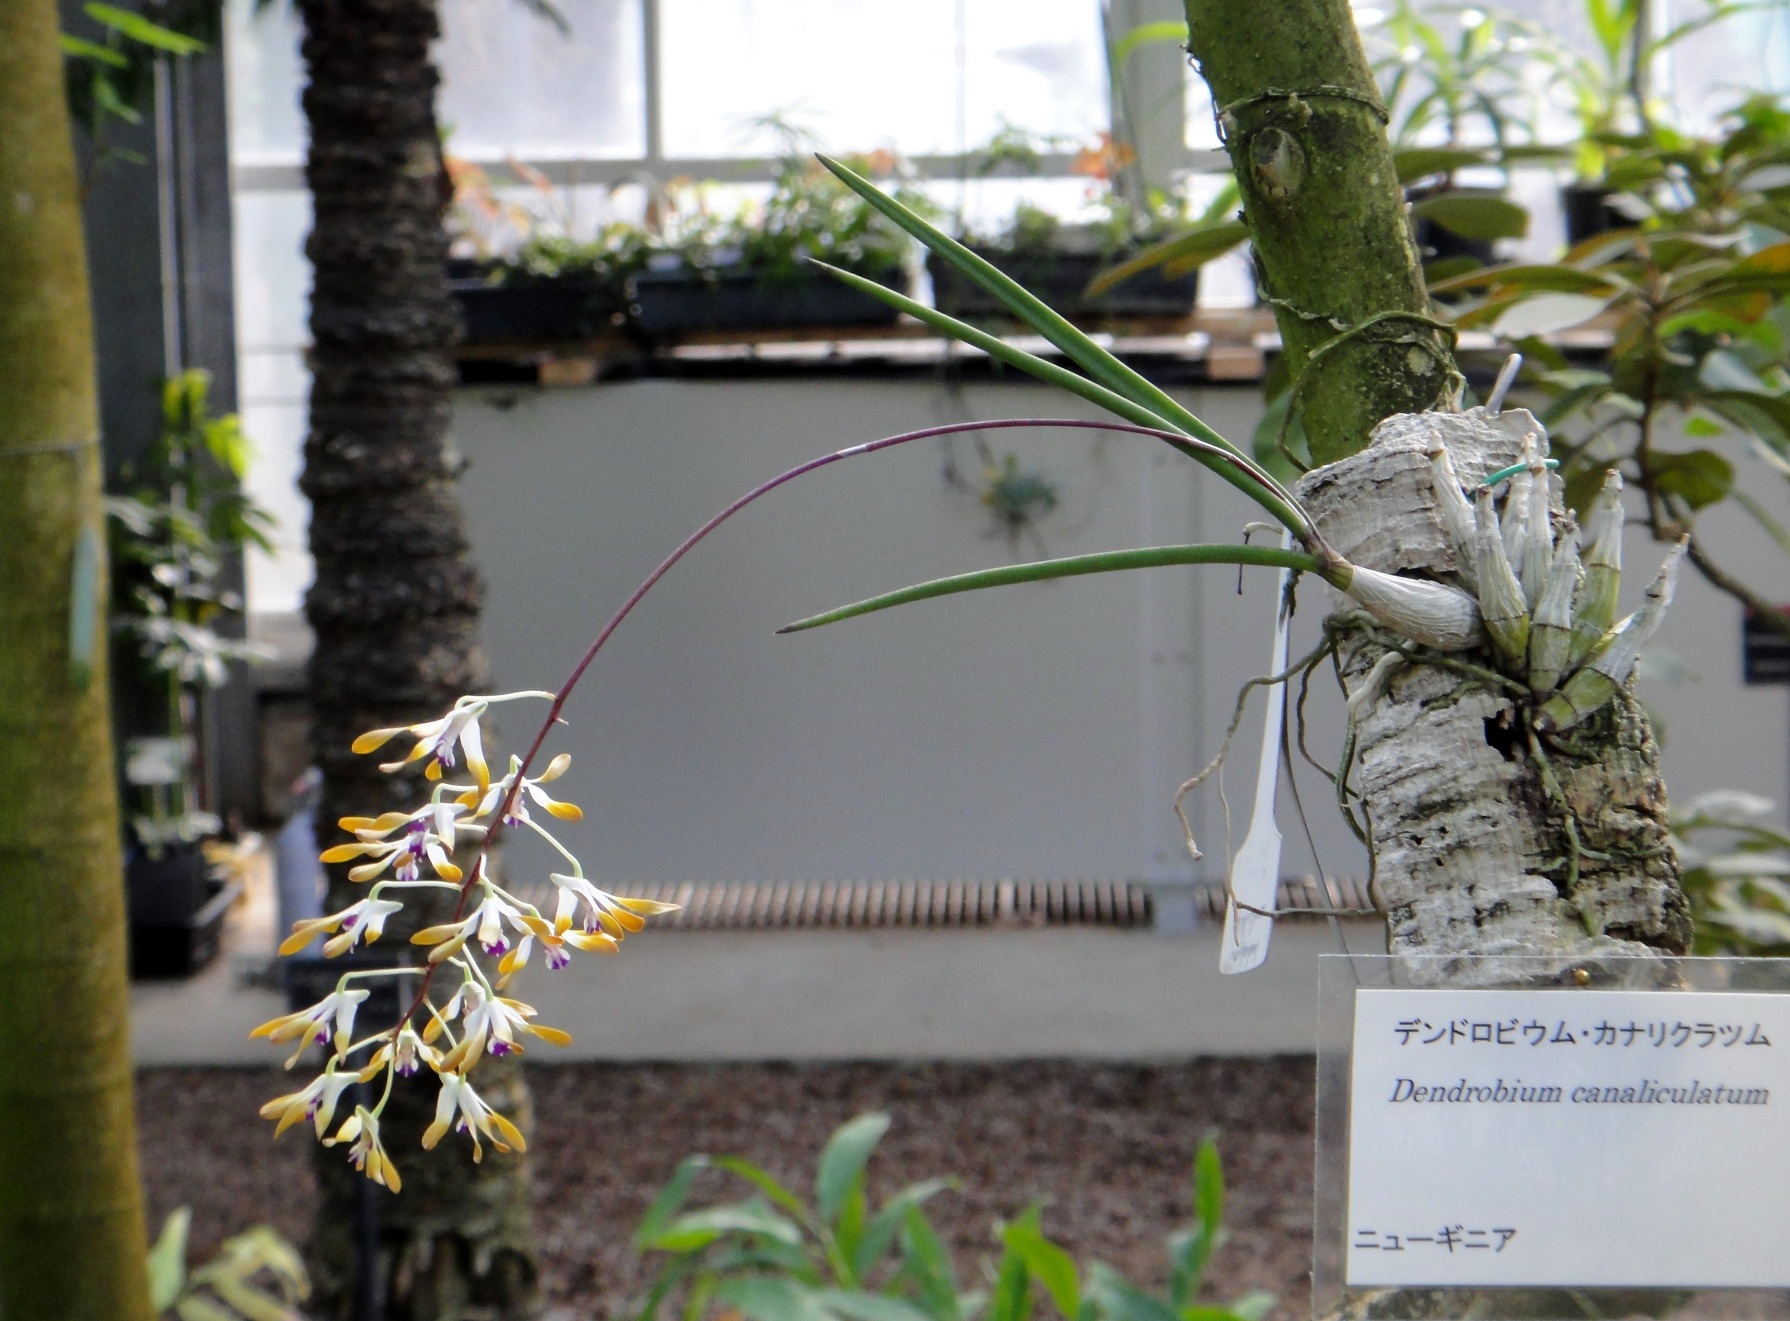 http://orchids.la.coocan.jp/Dendrobium/Dendrobium%20canaliculatum/DSC08267.JPG